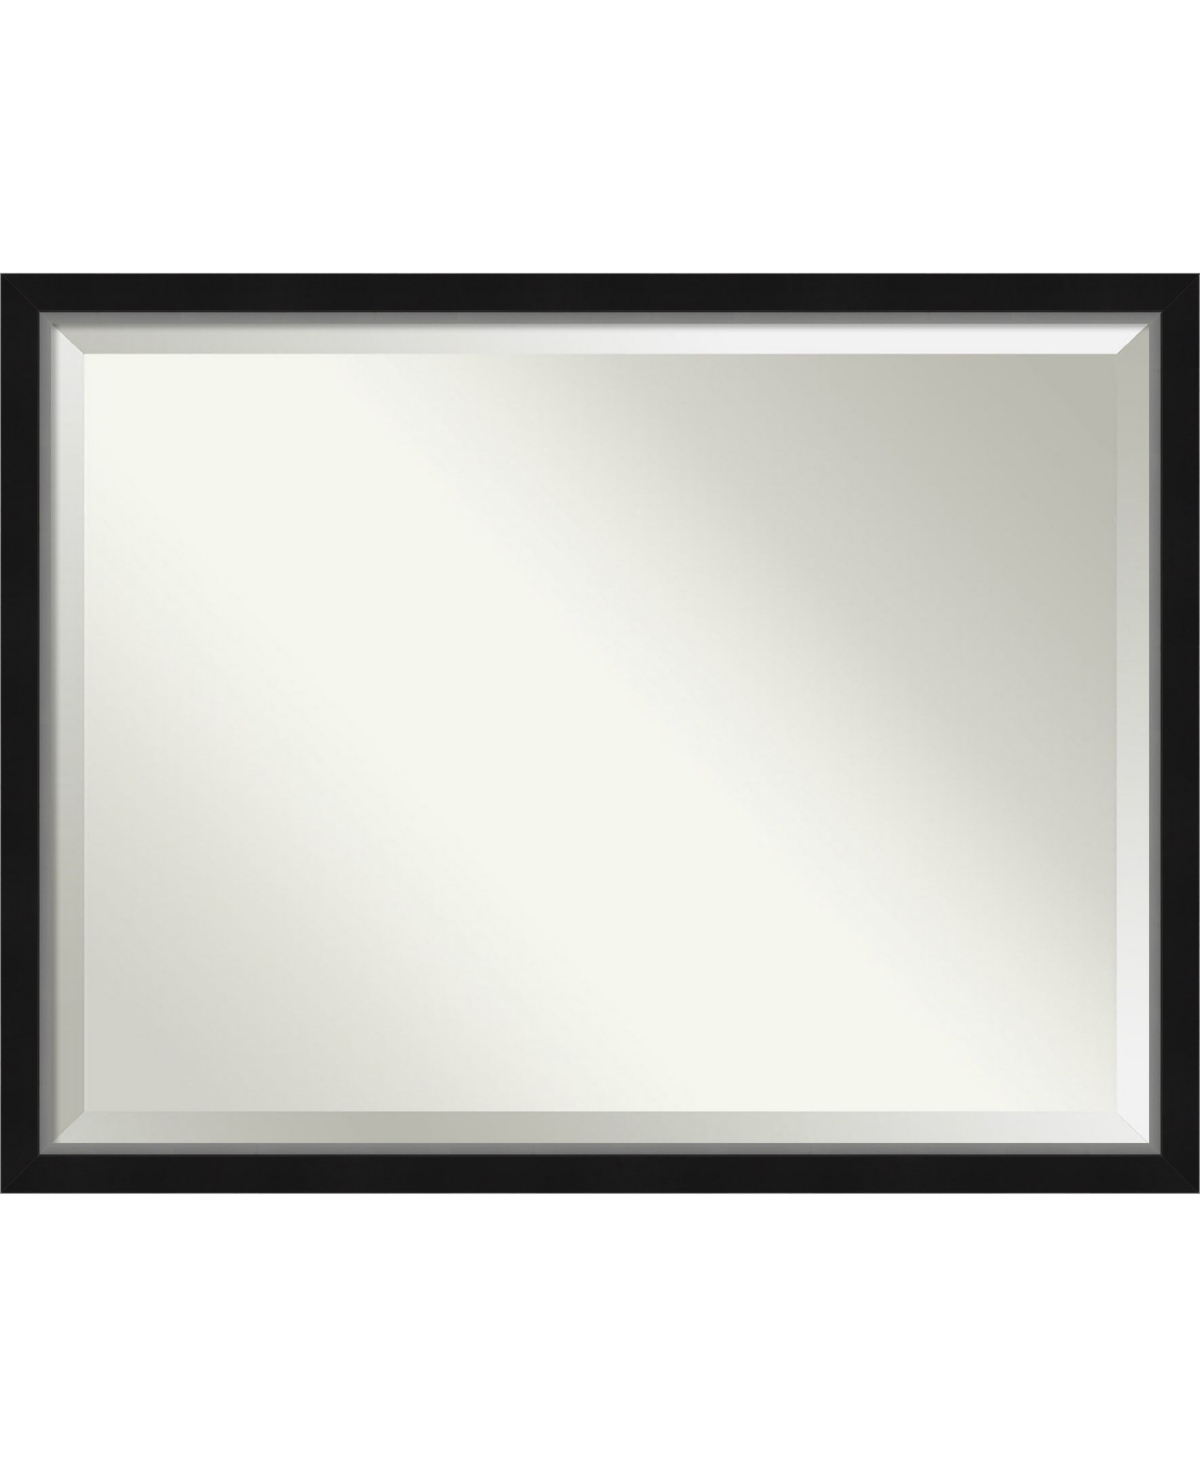 Eva Silver-tone Framed Bathroom Vanity Wall Mirror, 43.12" x 33.12" - Black